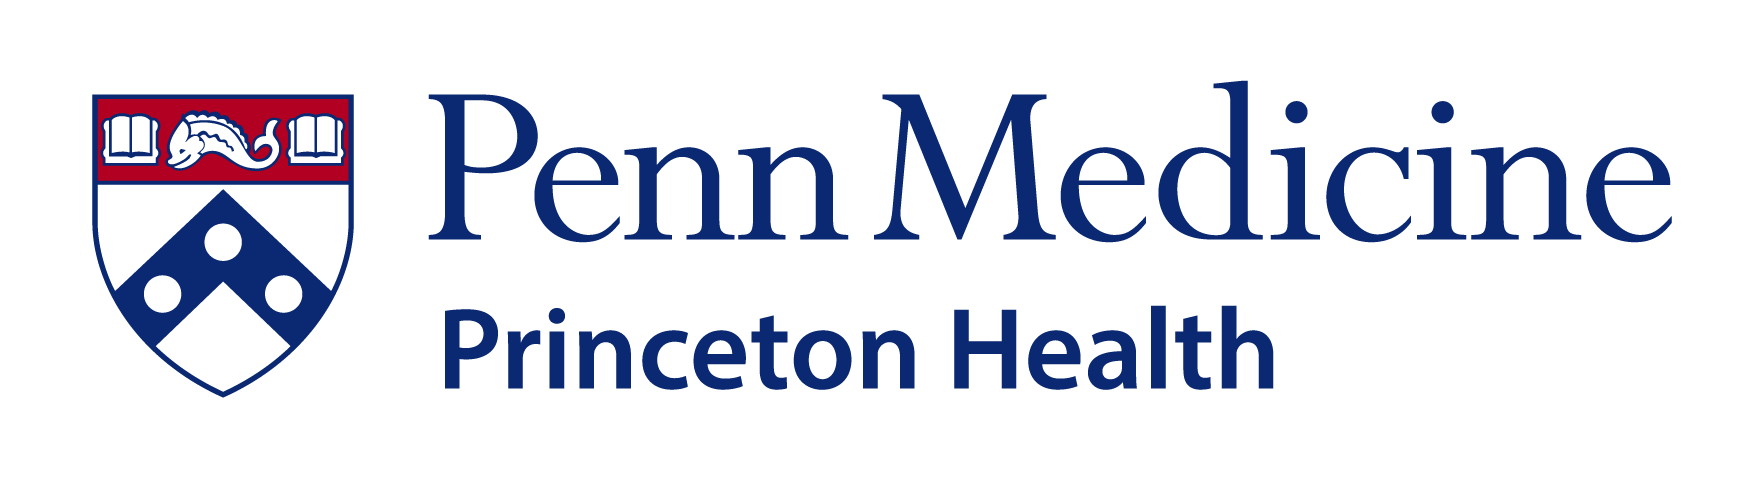 Princeton Health